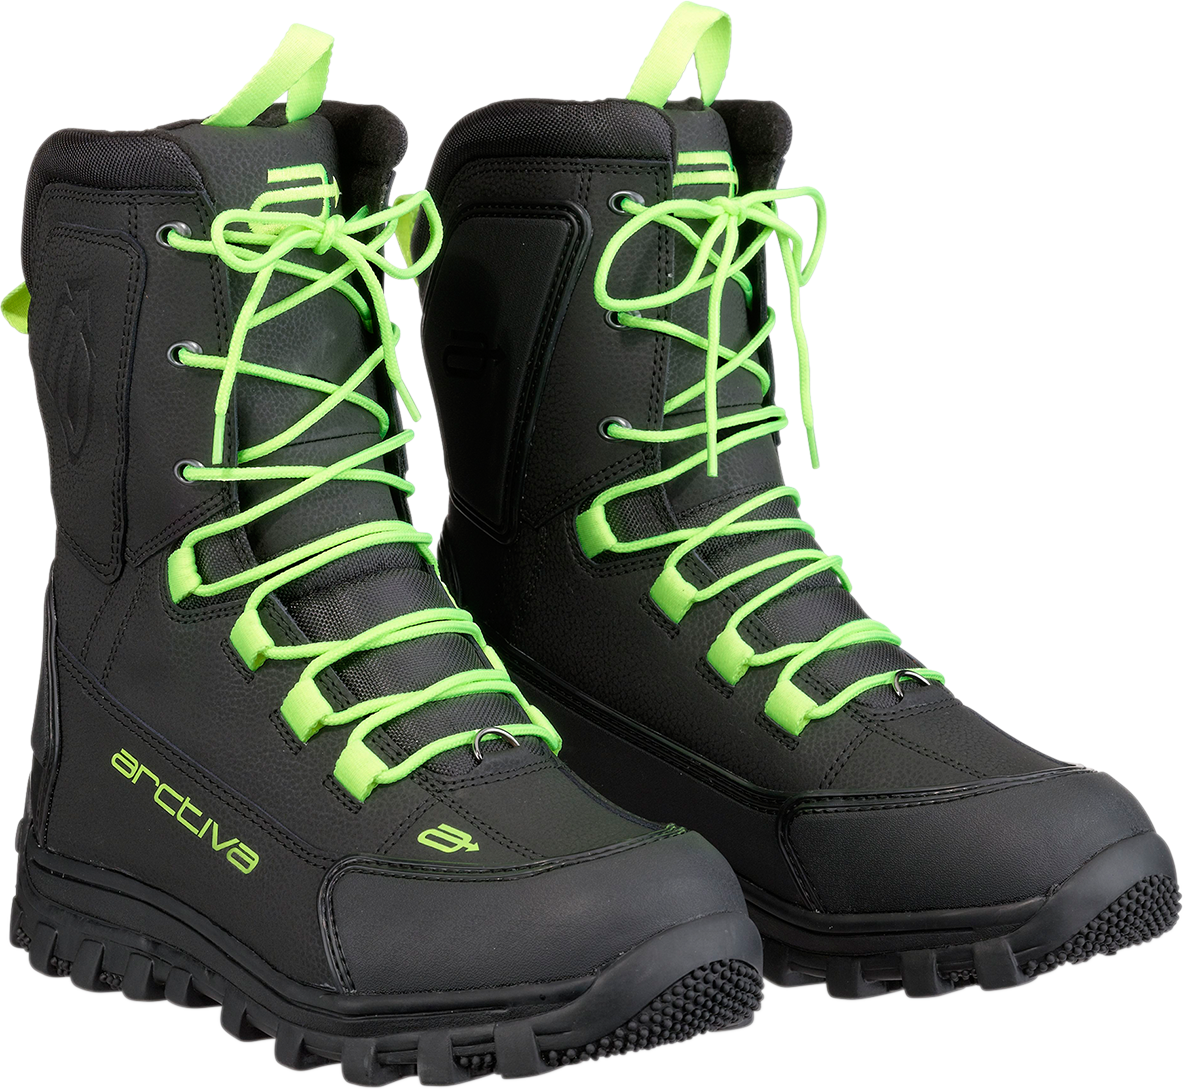 ARCTIVA Advance Boots - Black/Hi-Viz - Size 13 3420-0653